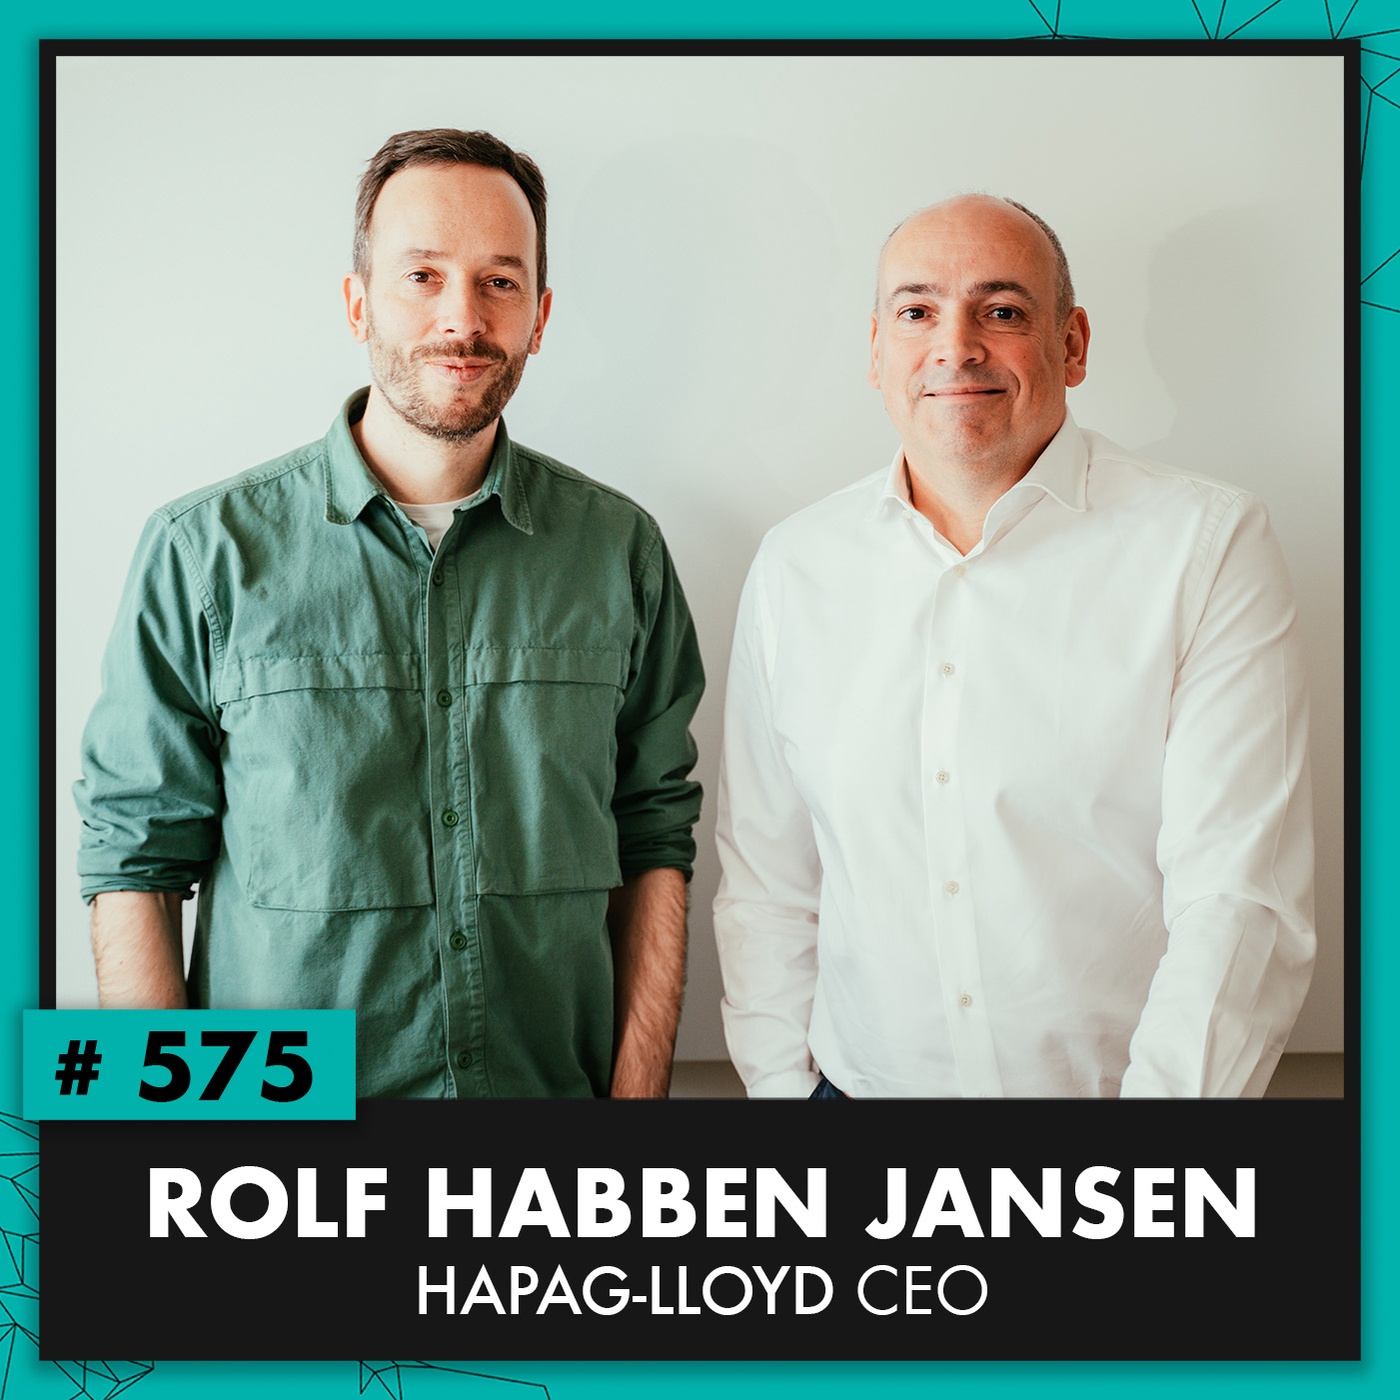 OMR #575 mit Hapag-Lloyd-CEO Rolf Habben Jansen